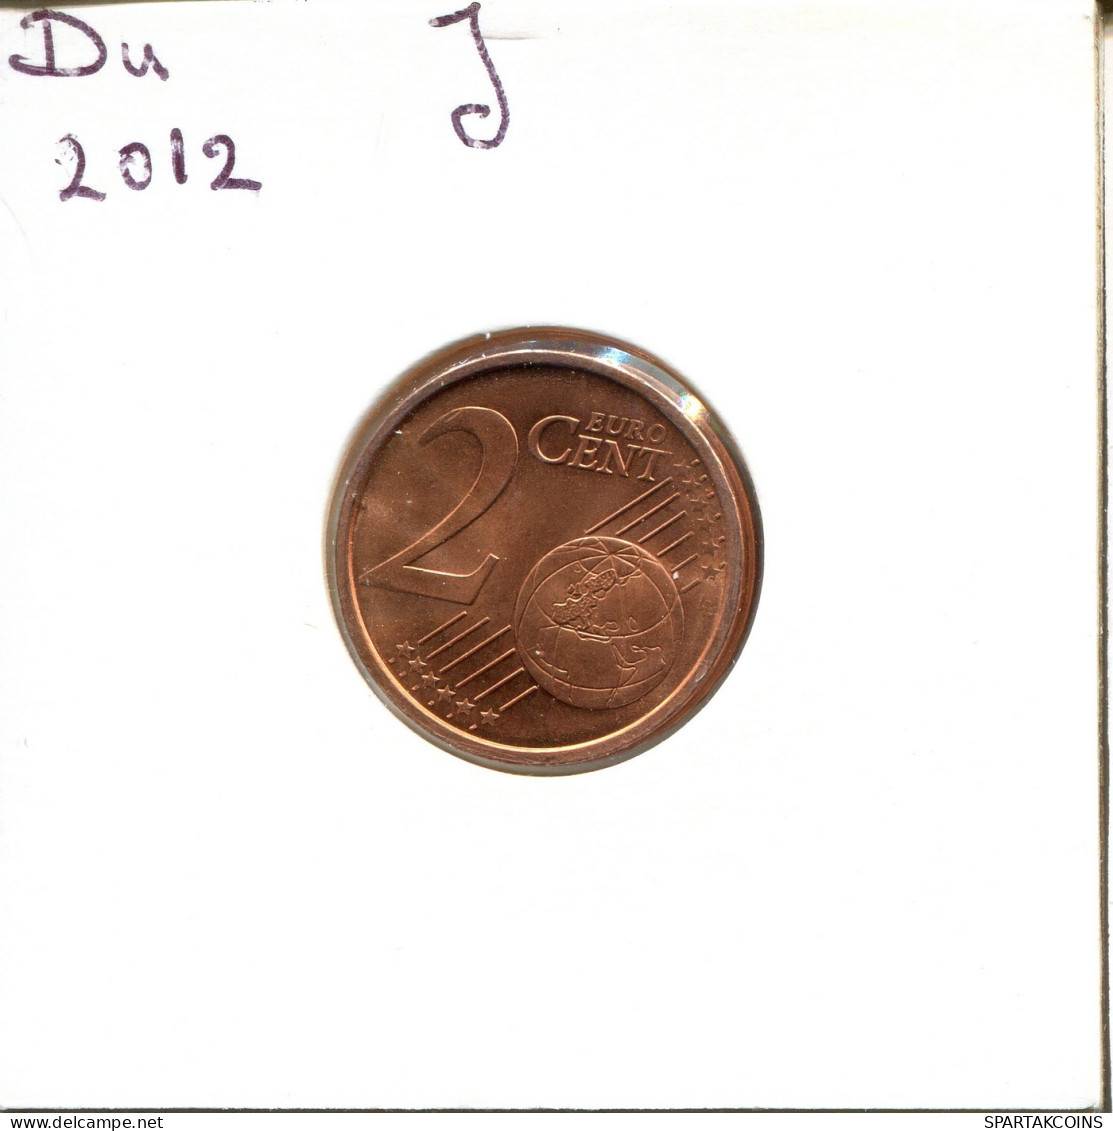 2 EURO CENTS 2012 ALEMANIA Moneda GERMANY #EU147.E.A - Duitsland